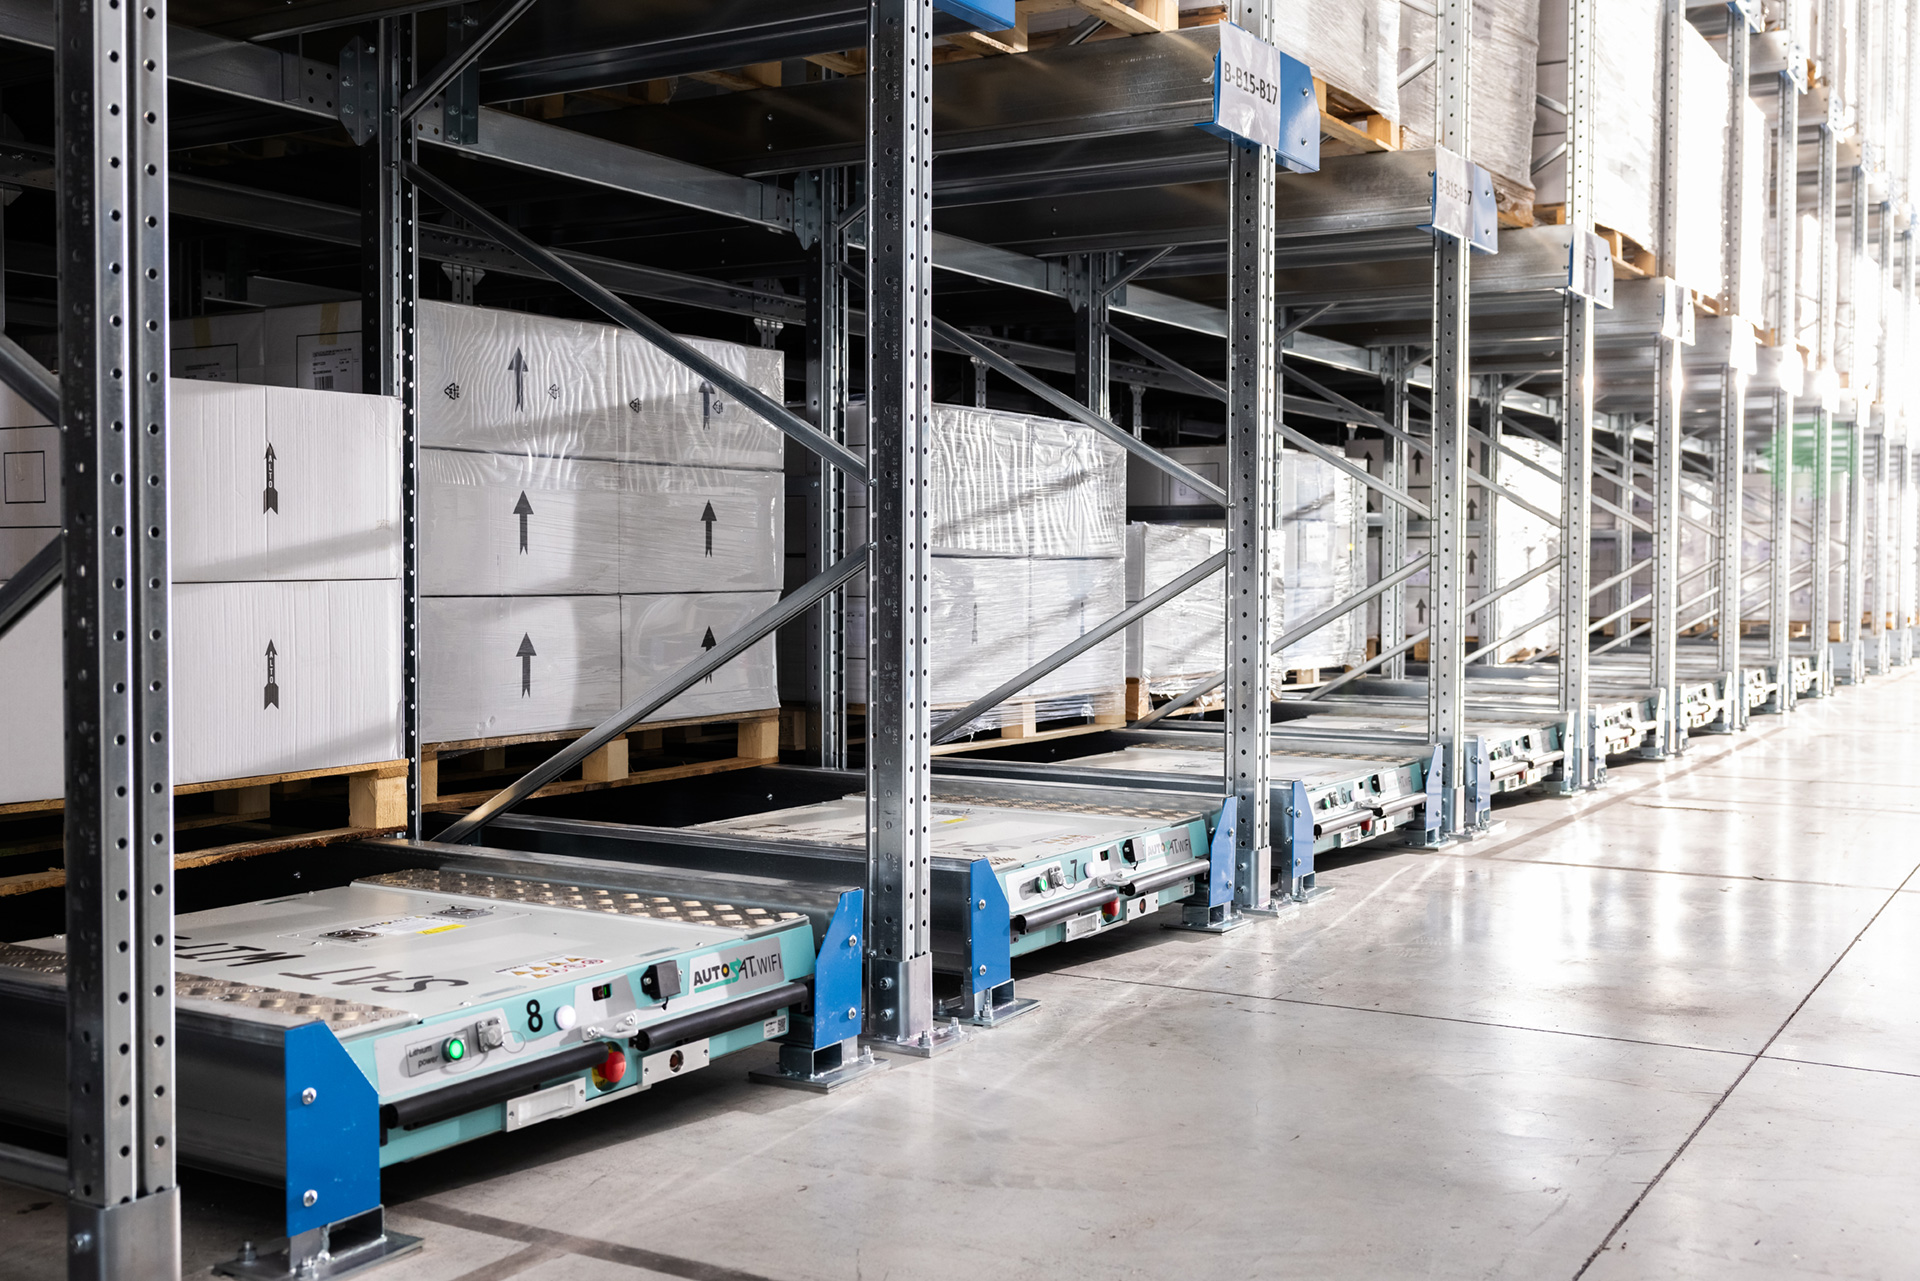 Impertek srl designs the new semi-automated warehouse.